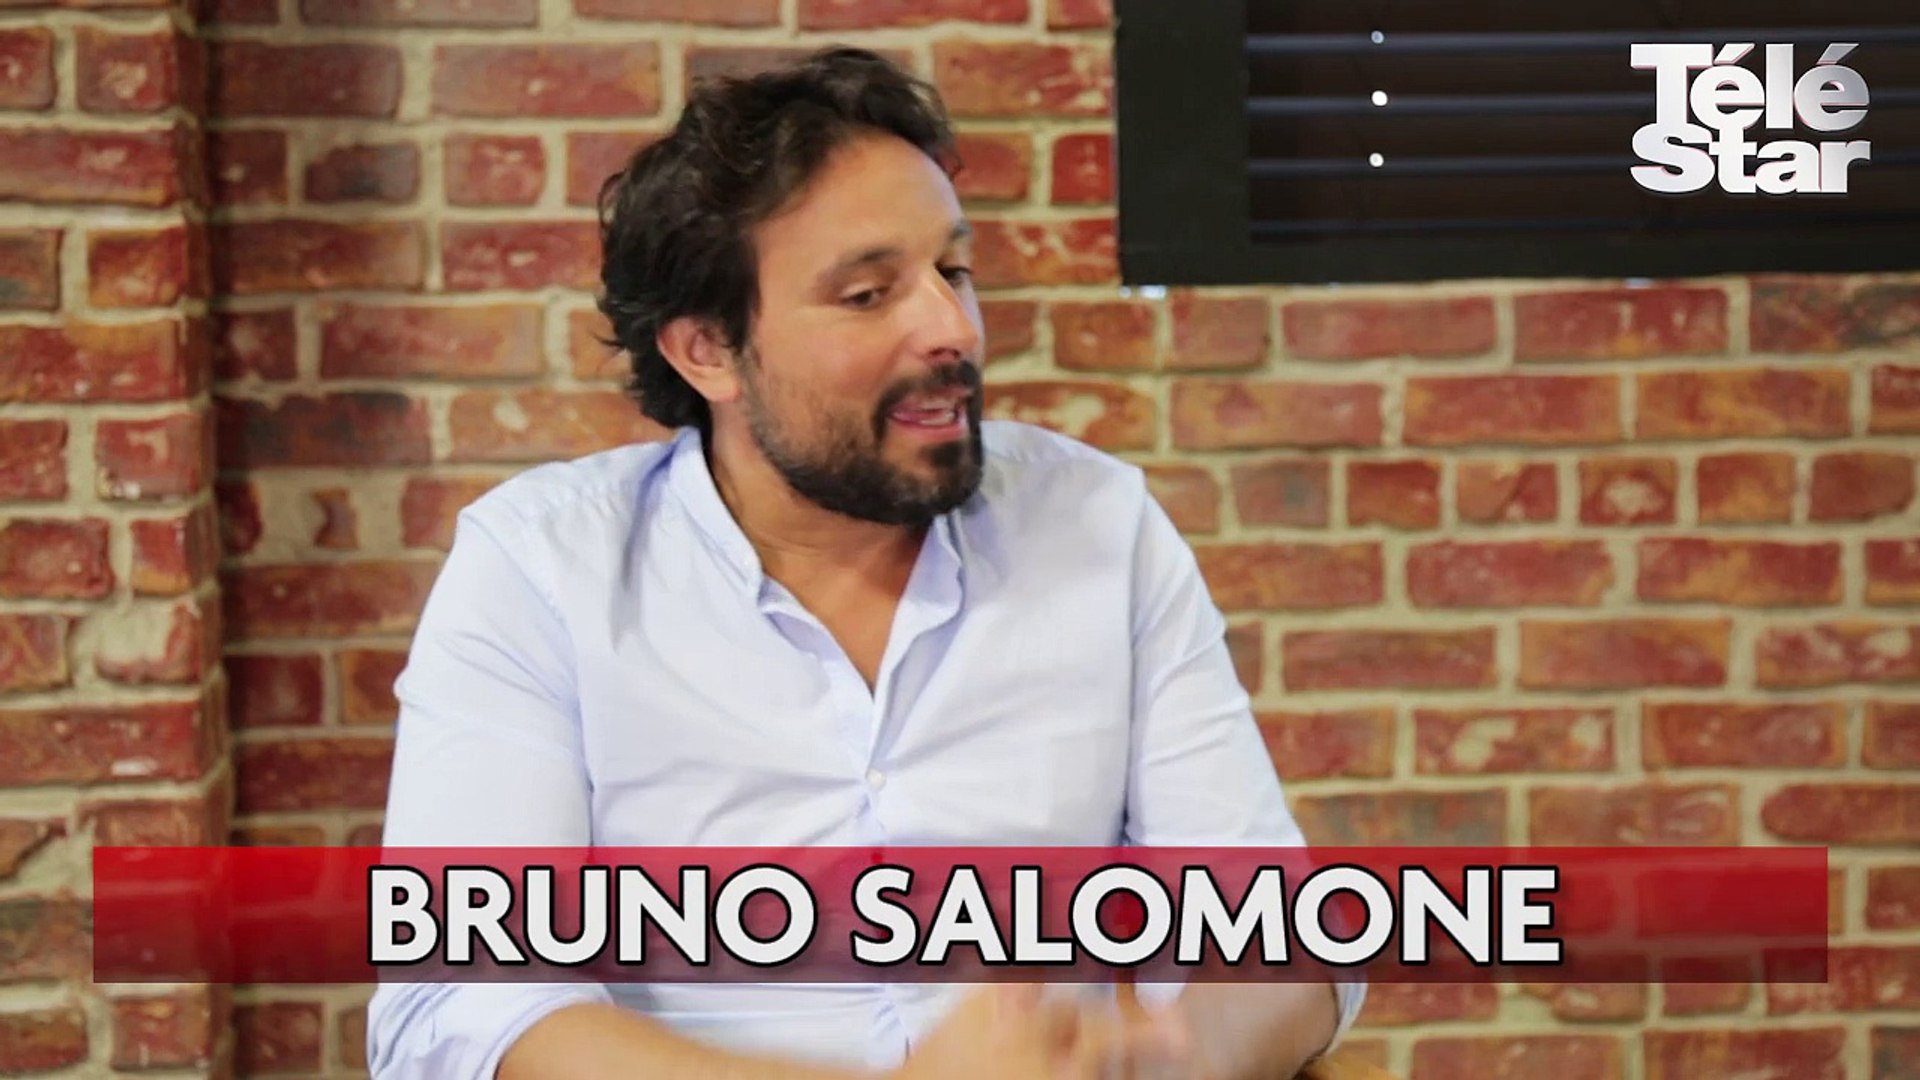 Sharknado 3 : L'interview de Bruno Salomone (TELE STAR) - Vidéo Dailymotion